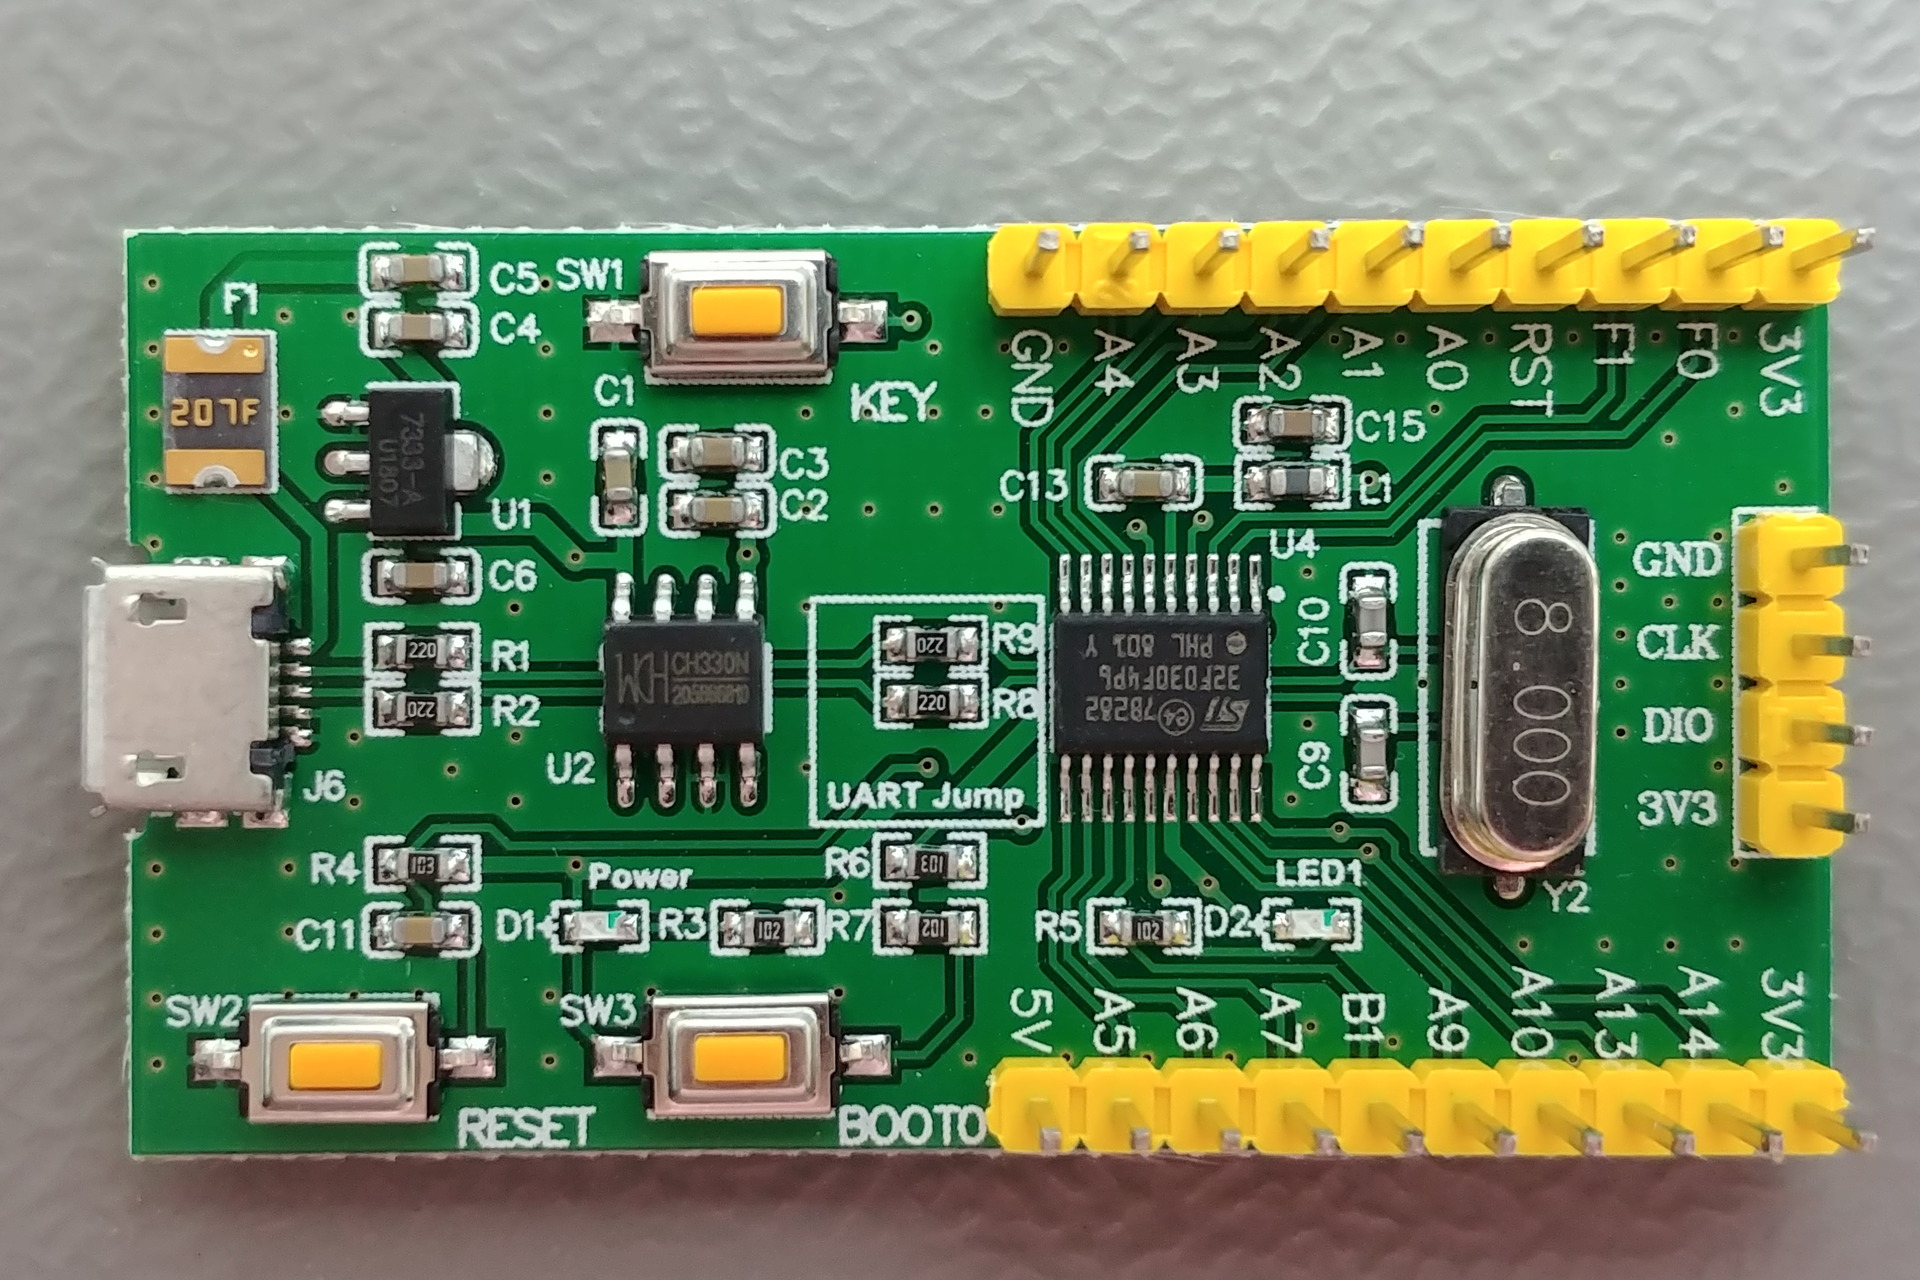 STM32F030F4 最小系统板 V2.0 (Minimal System Board): Top view